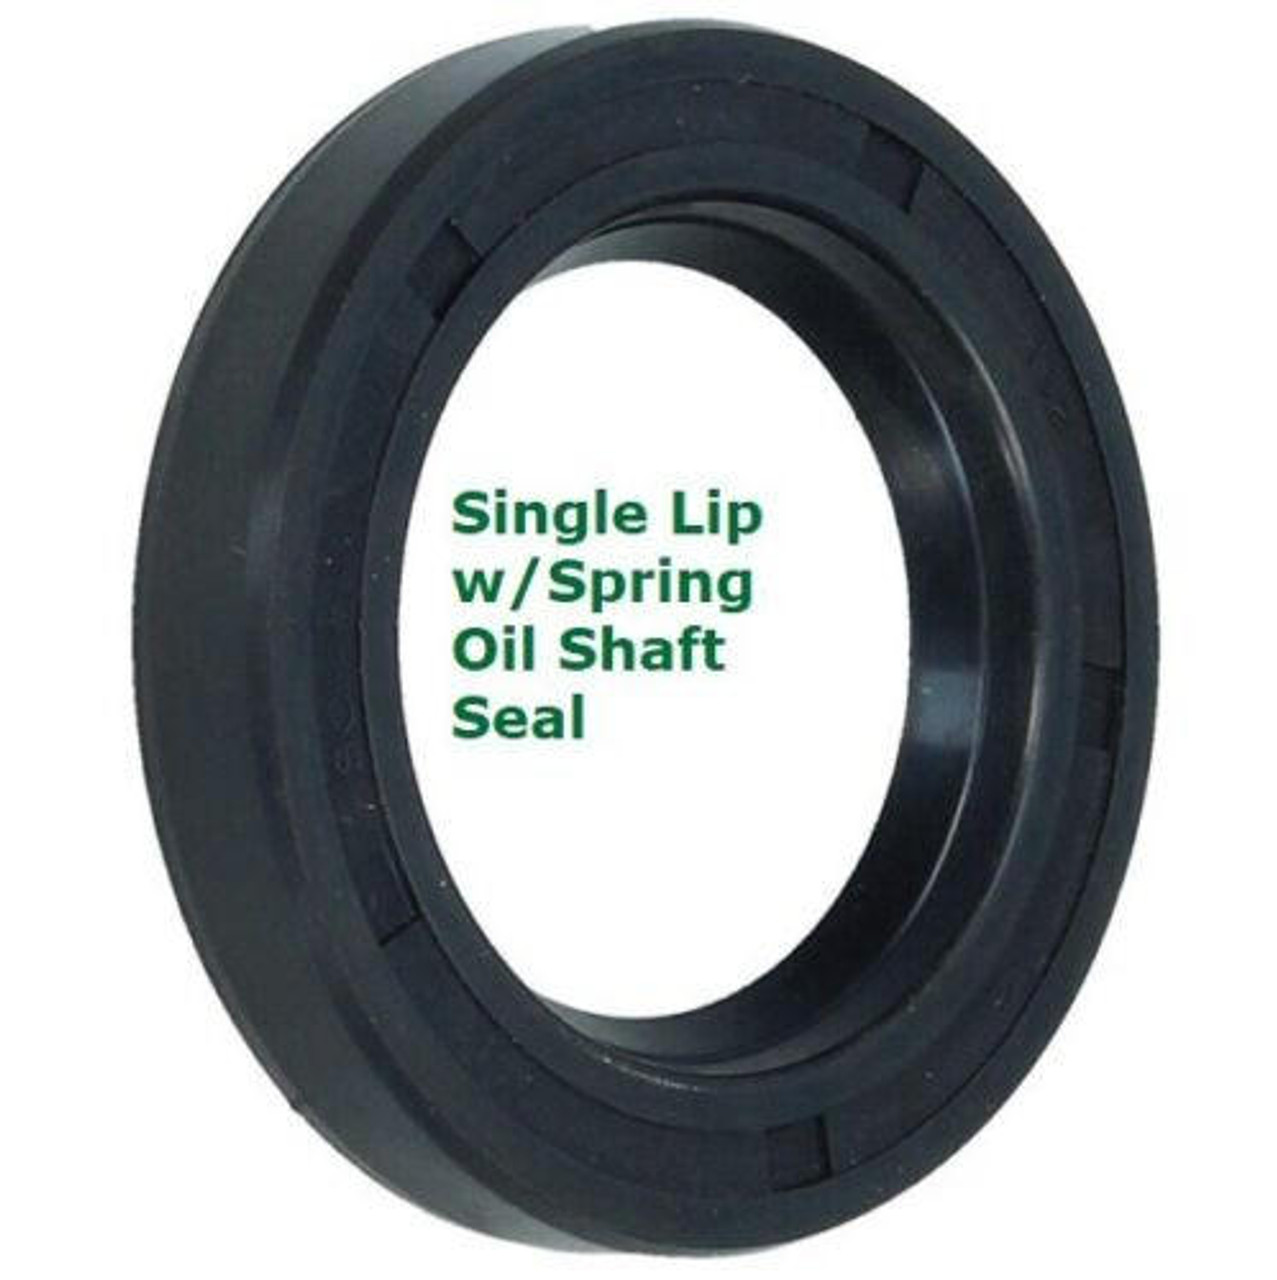 Metric Oil Shaft Seal 80 x 110 x 10mm  Single Lip   Price for 1 pc